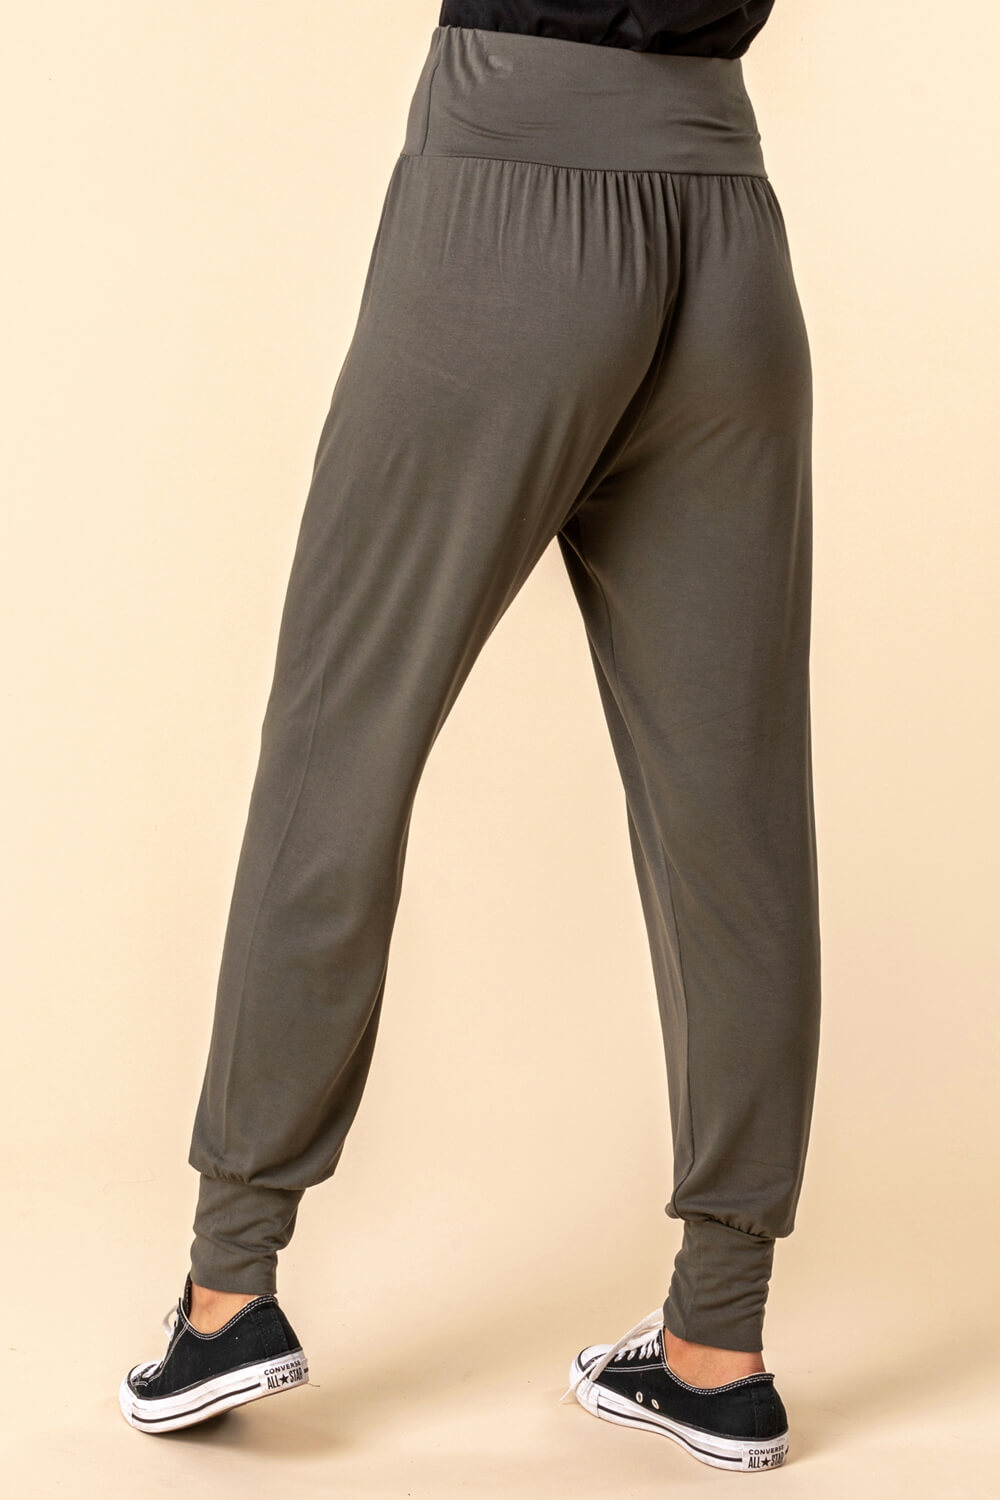 KHAKI Jersey Stretch Harem Trousers, Image 3 of 4